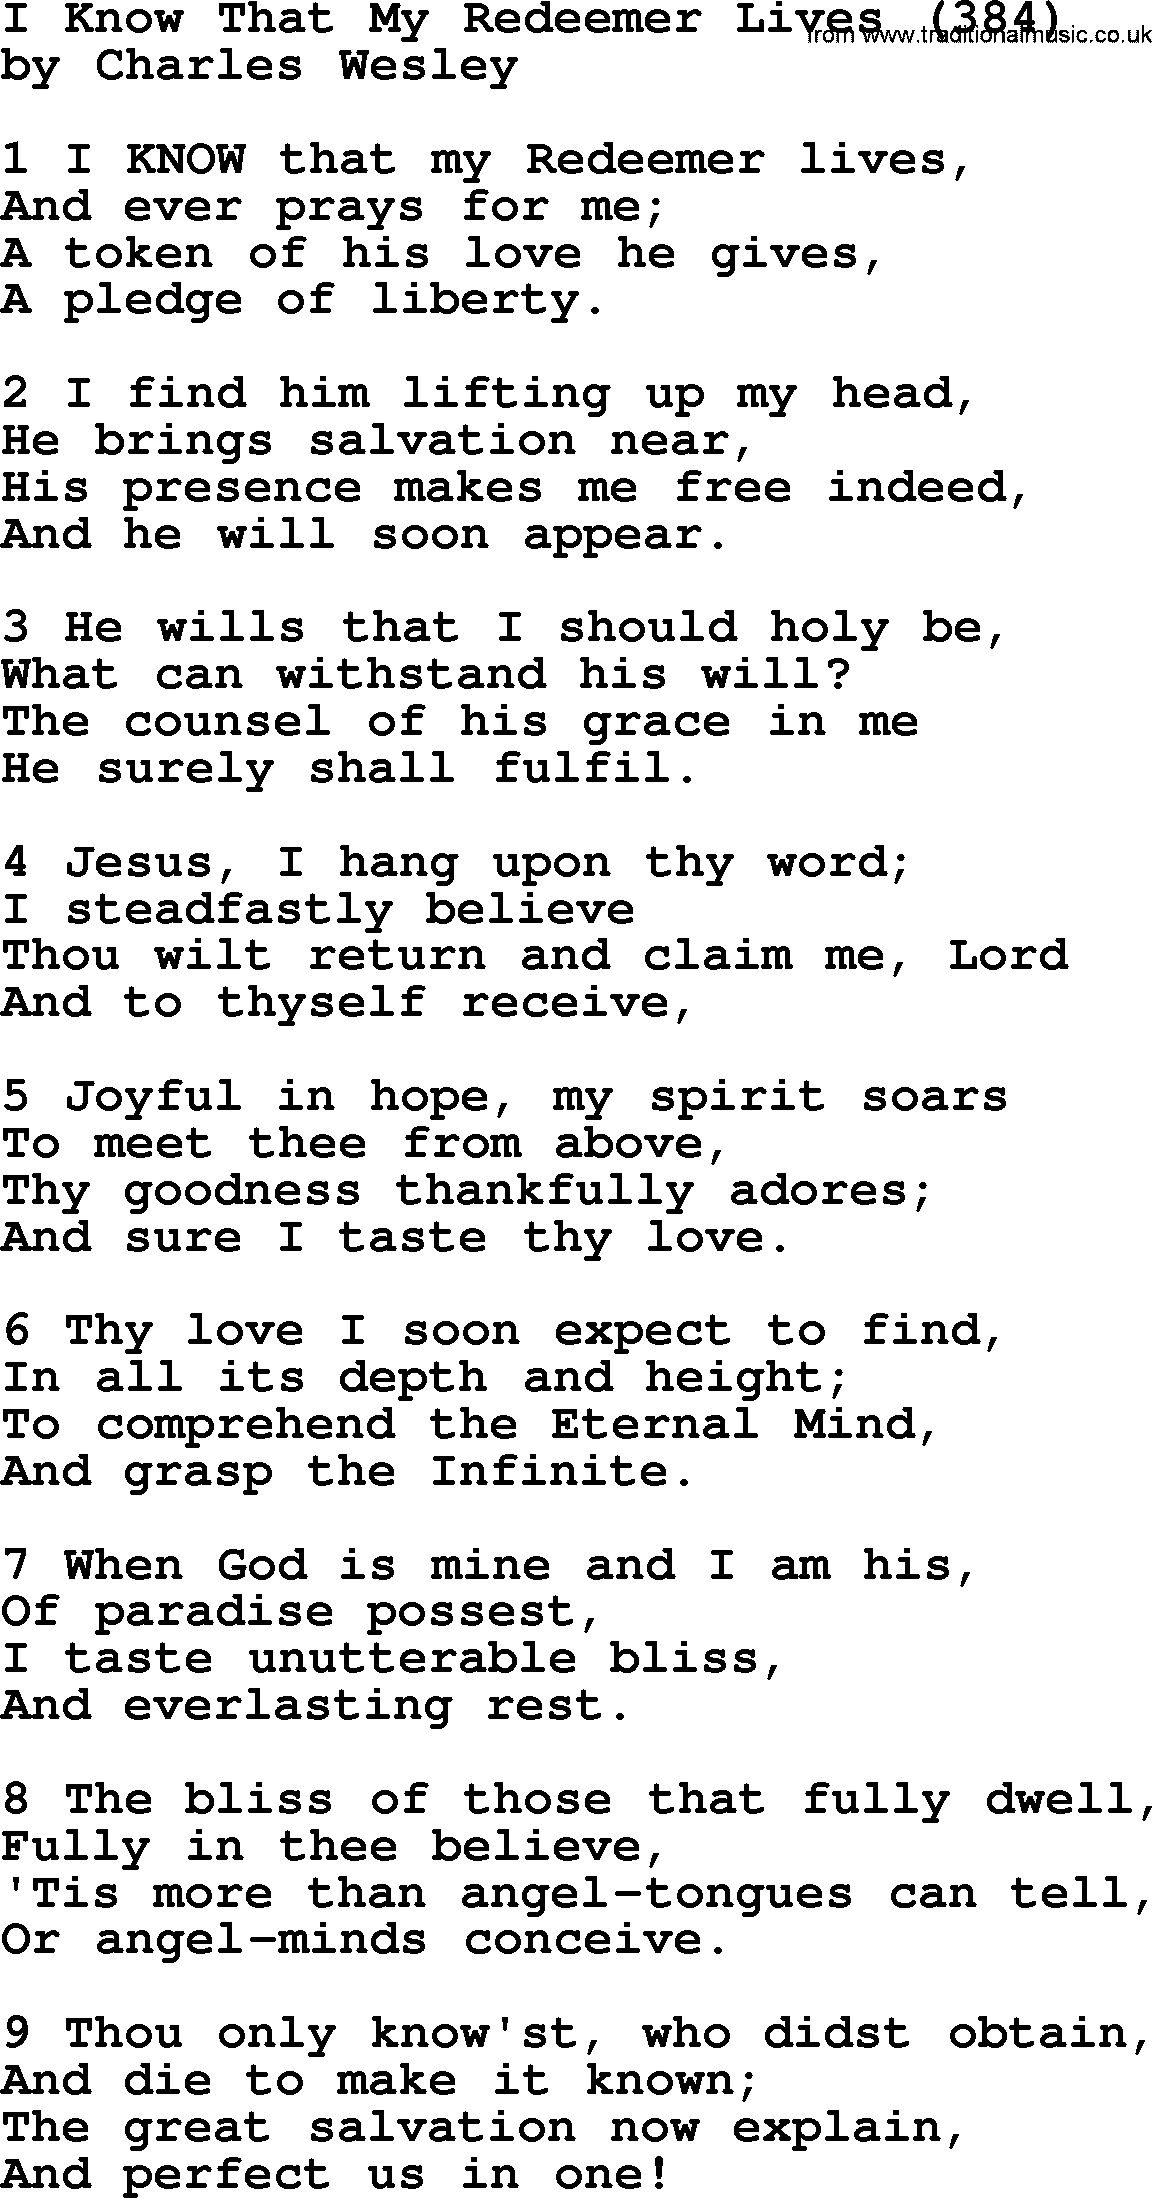 Charles Wesley hymn: I Know That My Redeemer Lives (384), lyrics